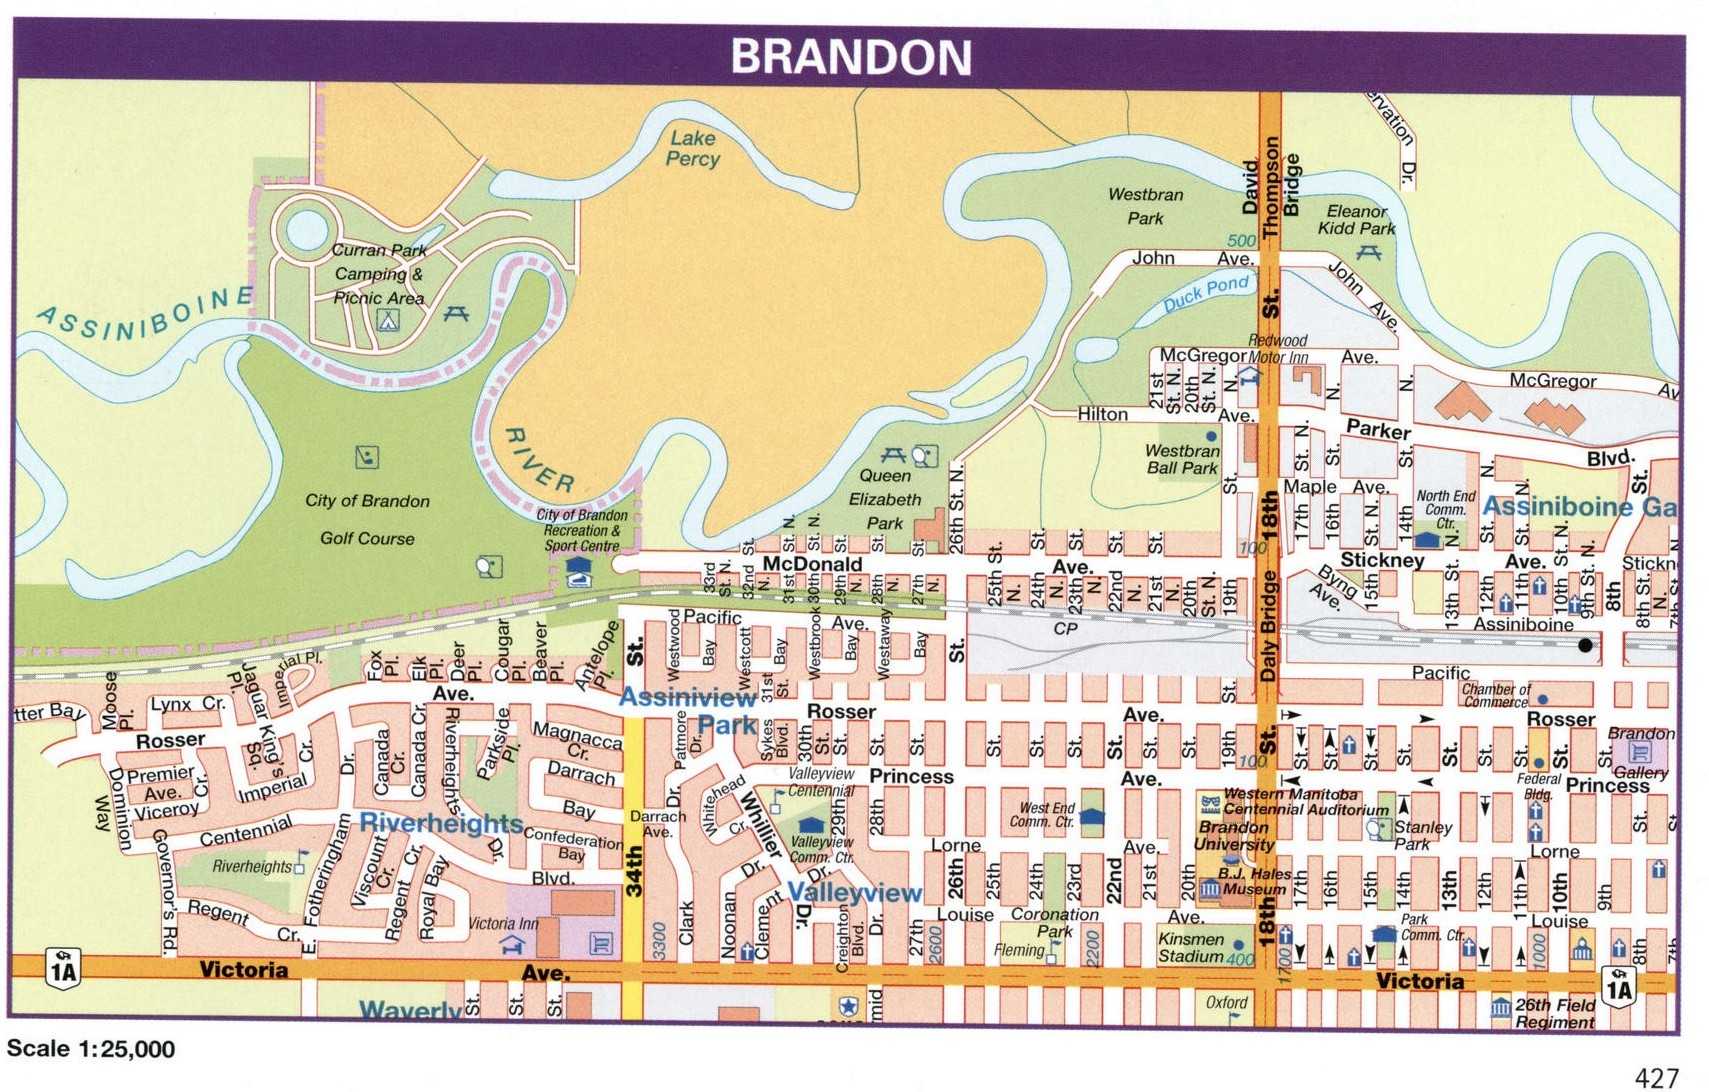 نقشه شهر براندون کانادا